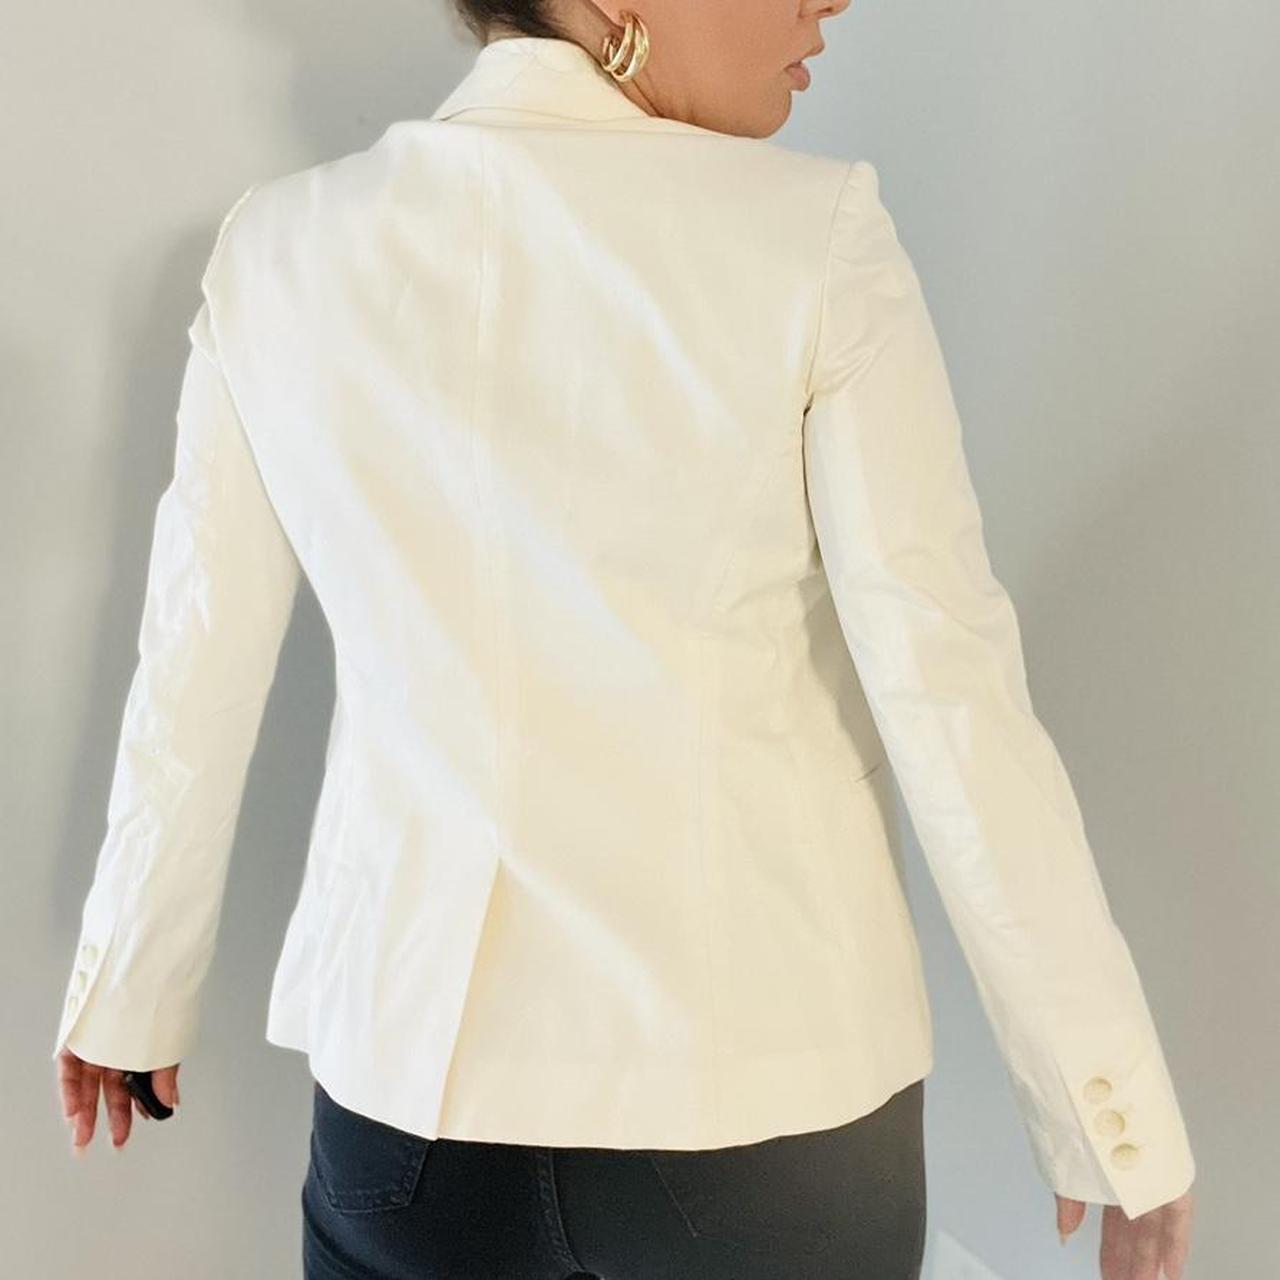 Envii Women's White and Cream Jacket (2)